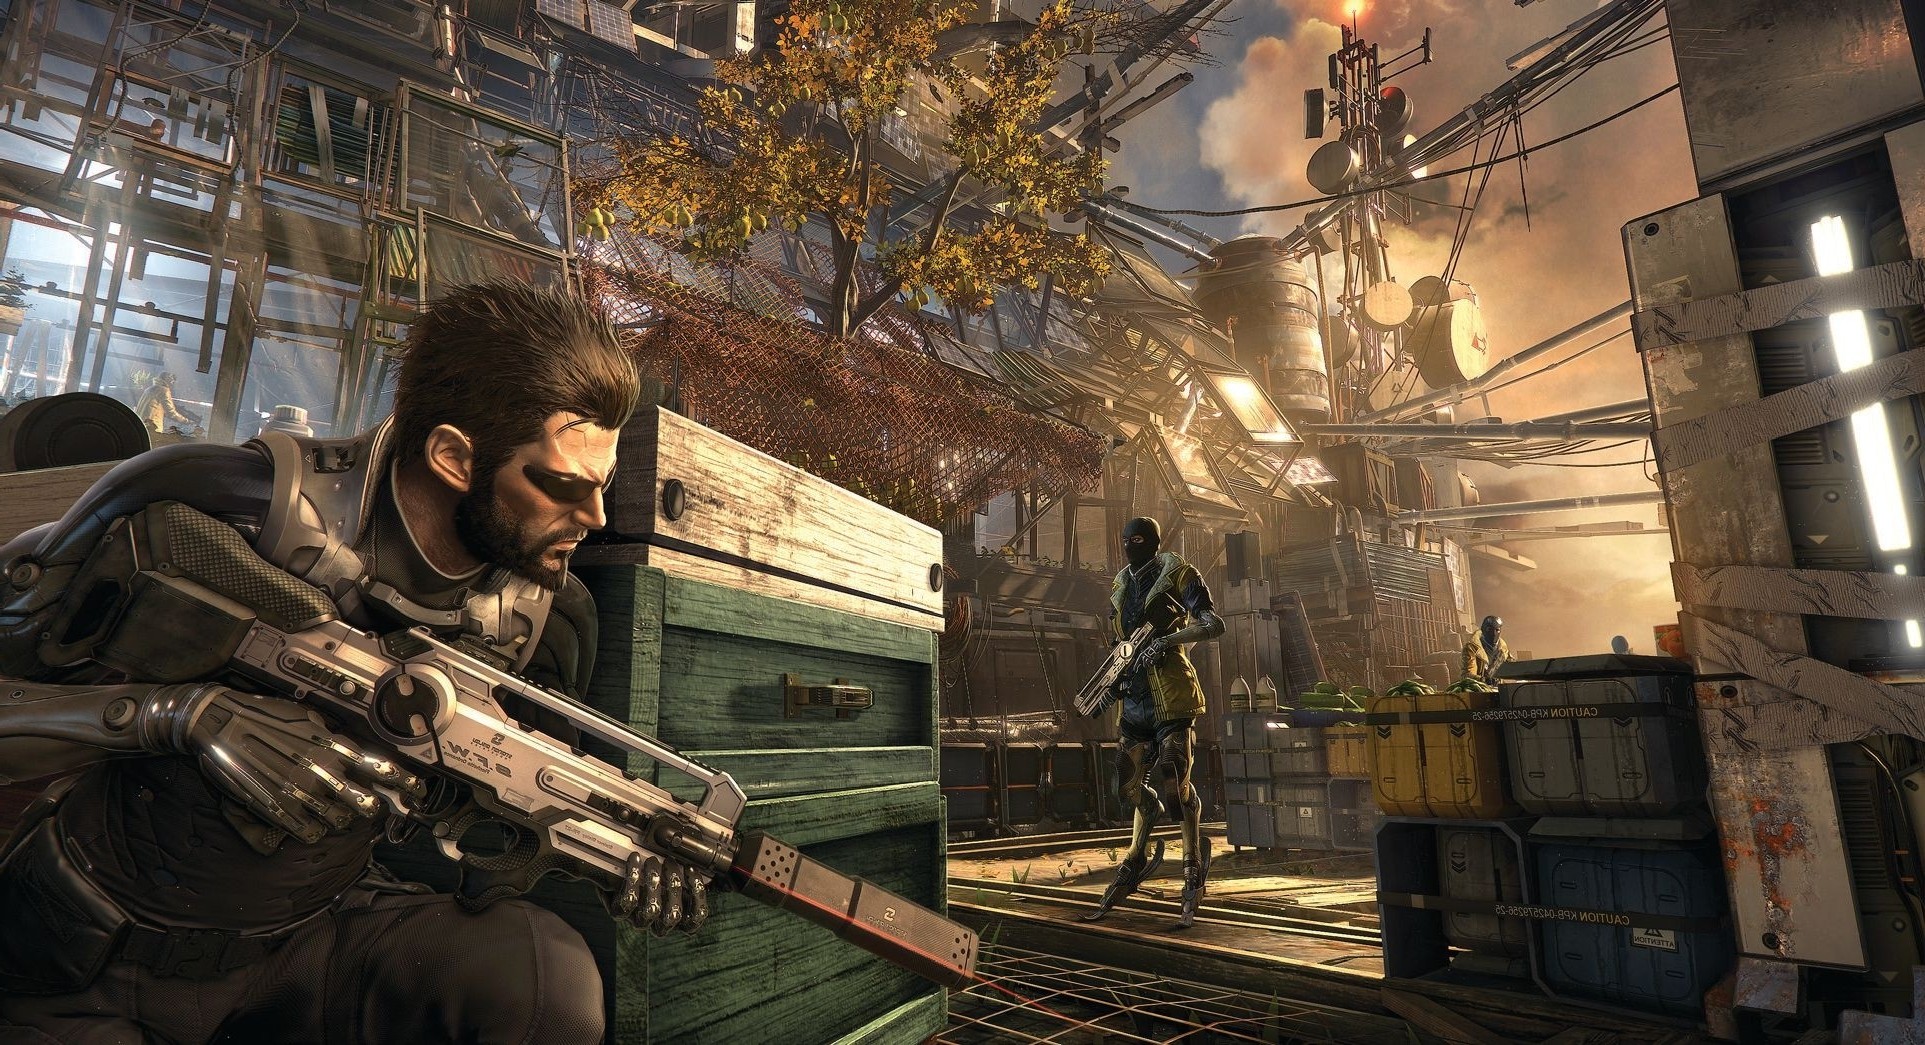 Deus Ex, Weapon, Adam Jensen, Cyberpunk, Science Fiction, Futuristic, Video Games, Deus Ex: Mankind Divided Wallpaper